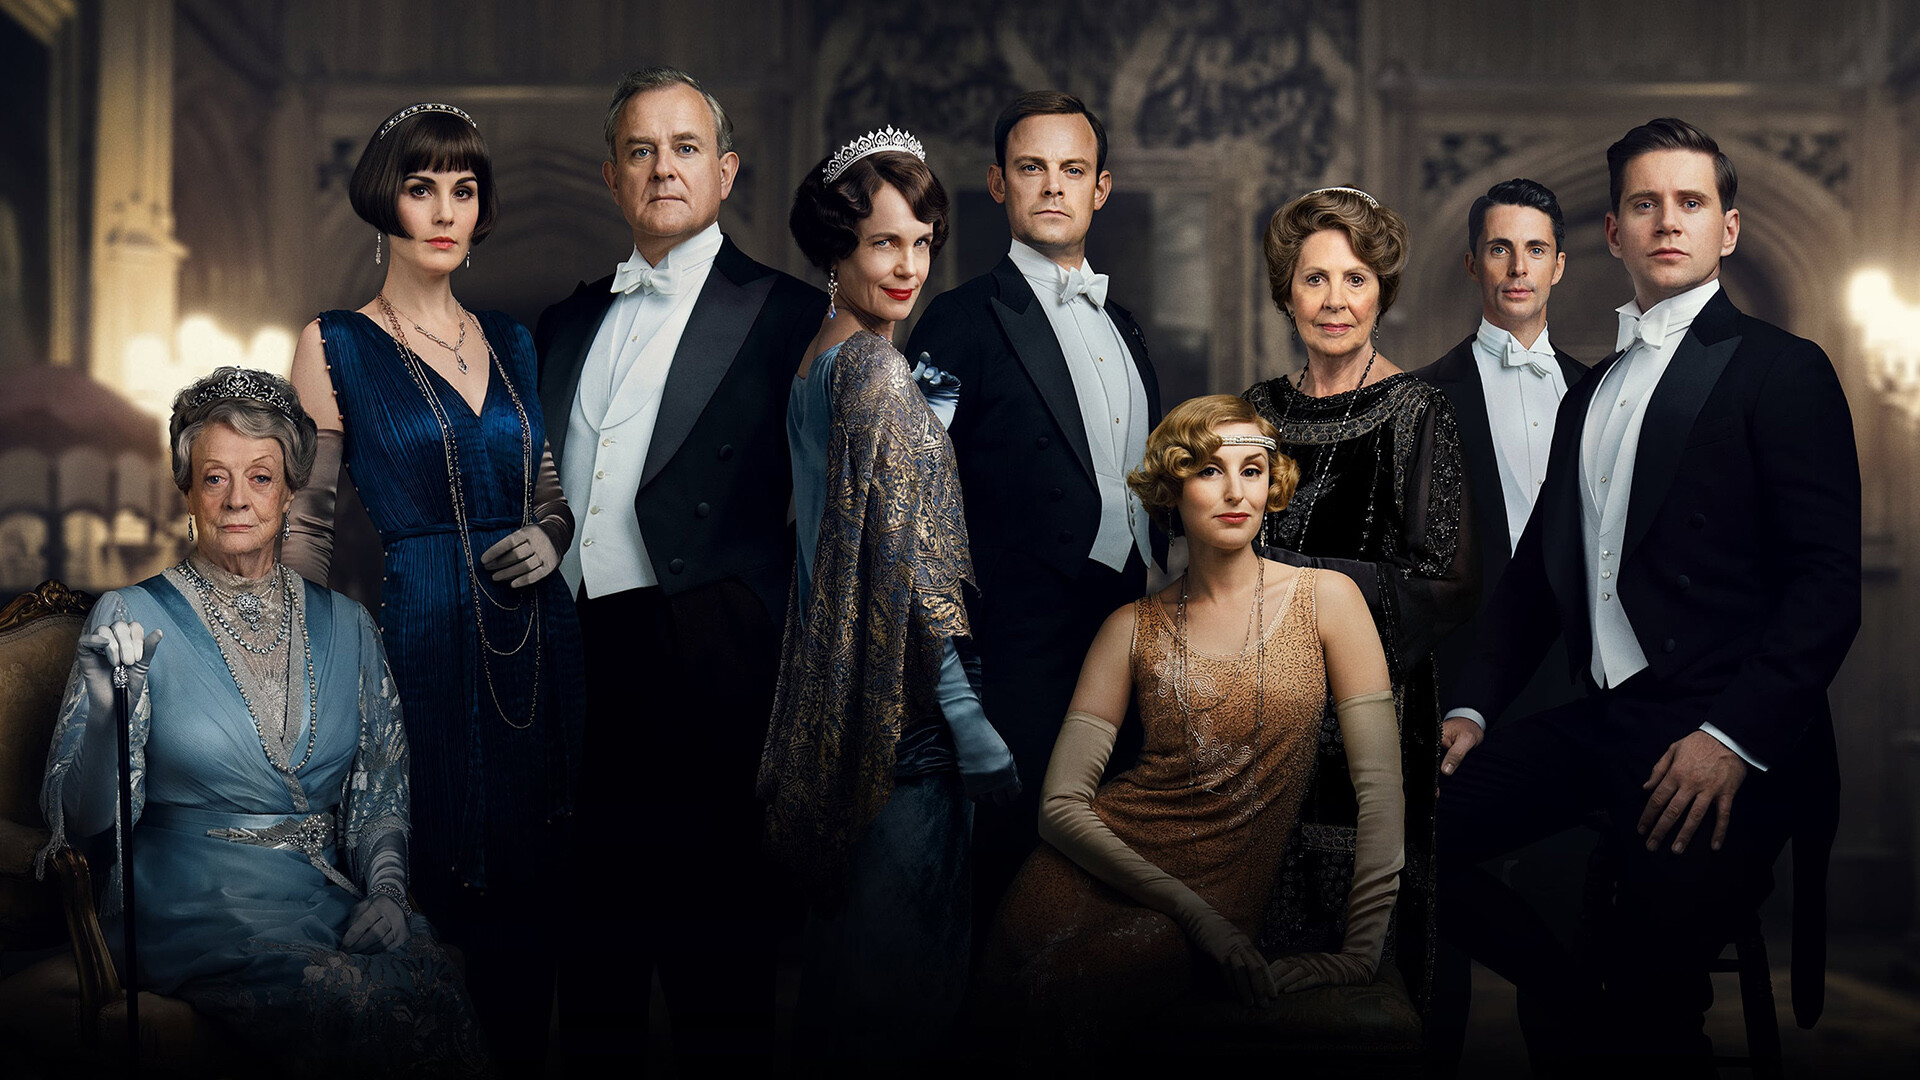 Downton Abbey: The series has won 6 Primetime Emmy Awards. 1920x1080 Full HD Wallpaper.